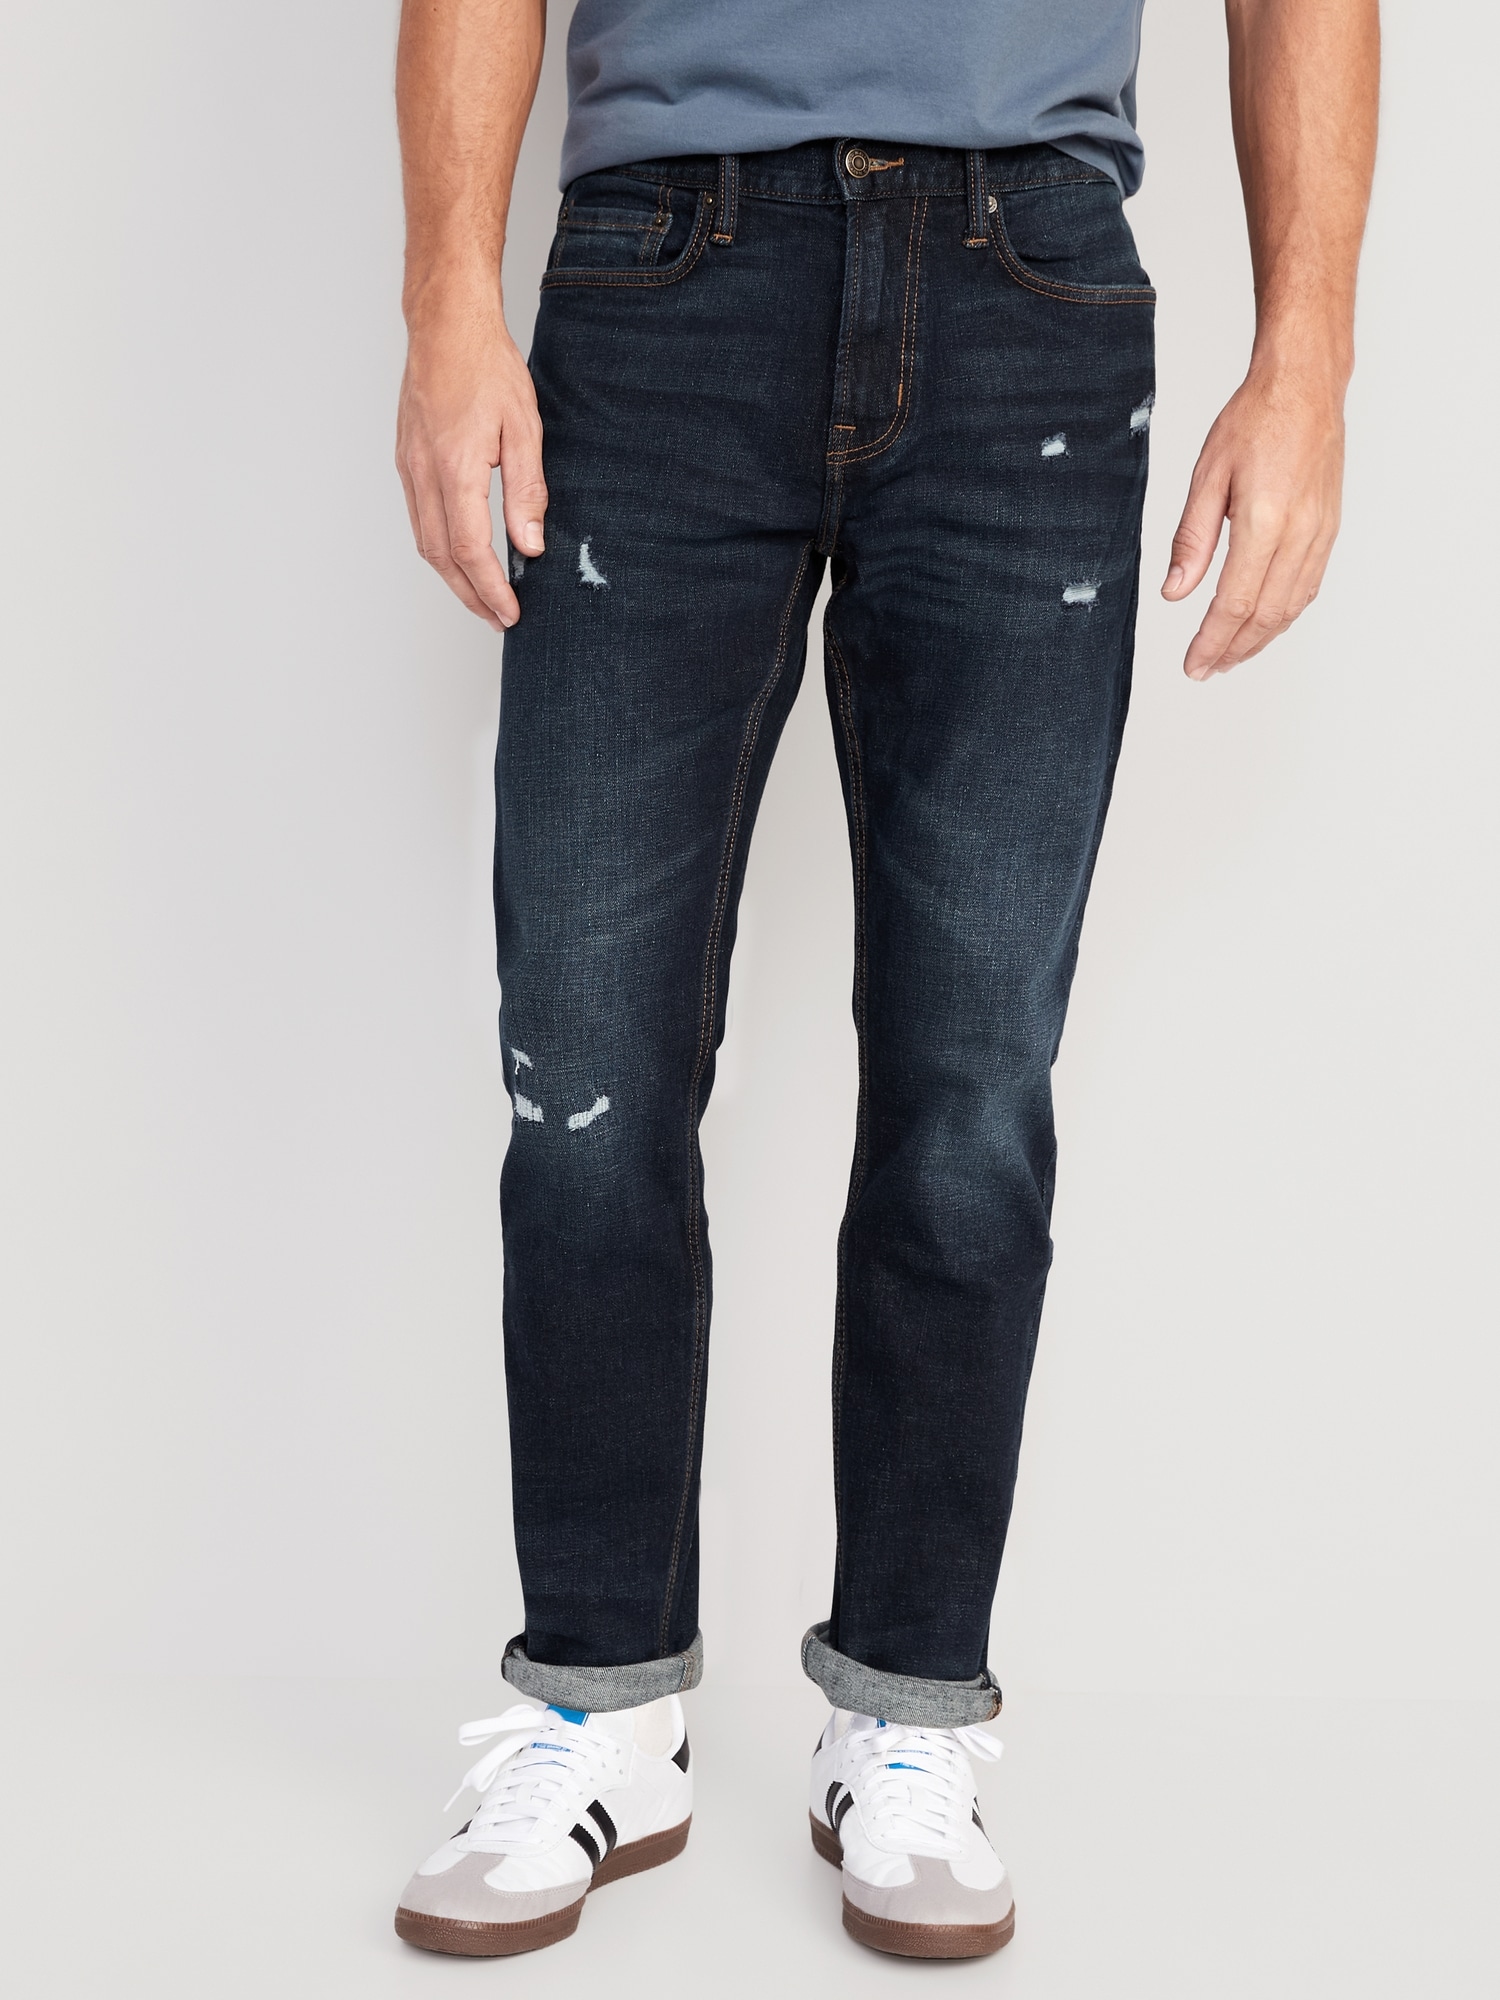 Relaxed Slim Taper Built-In Flex Rip & Repair Jeans | Old Navy